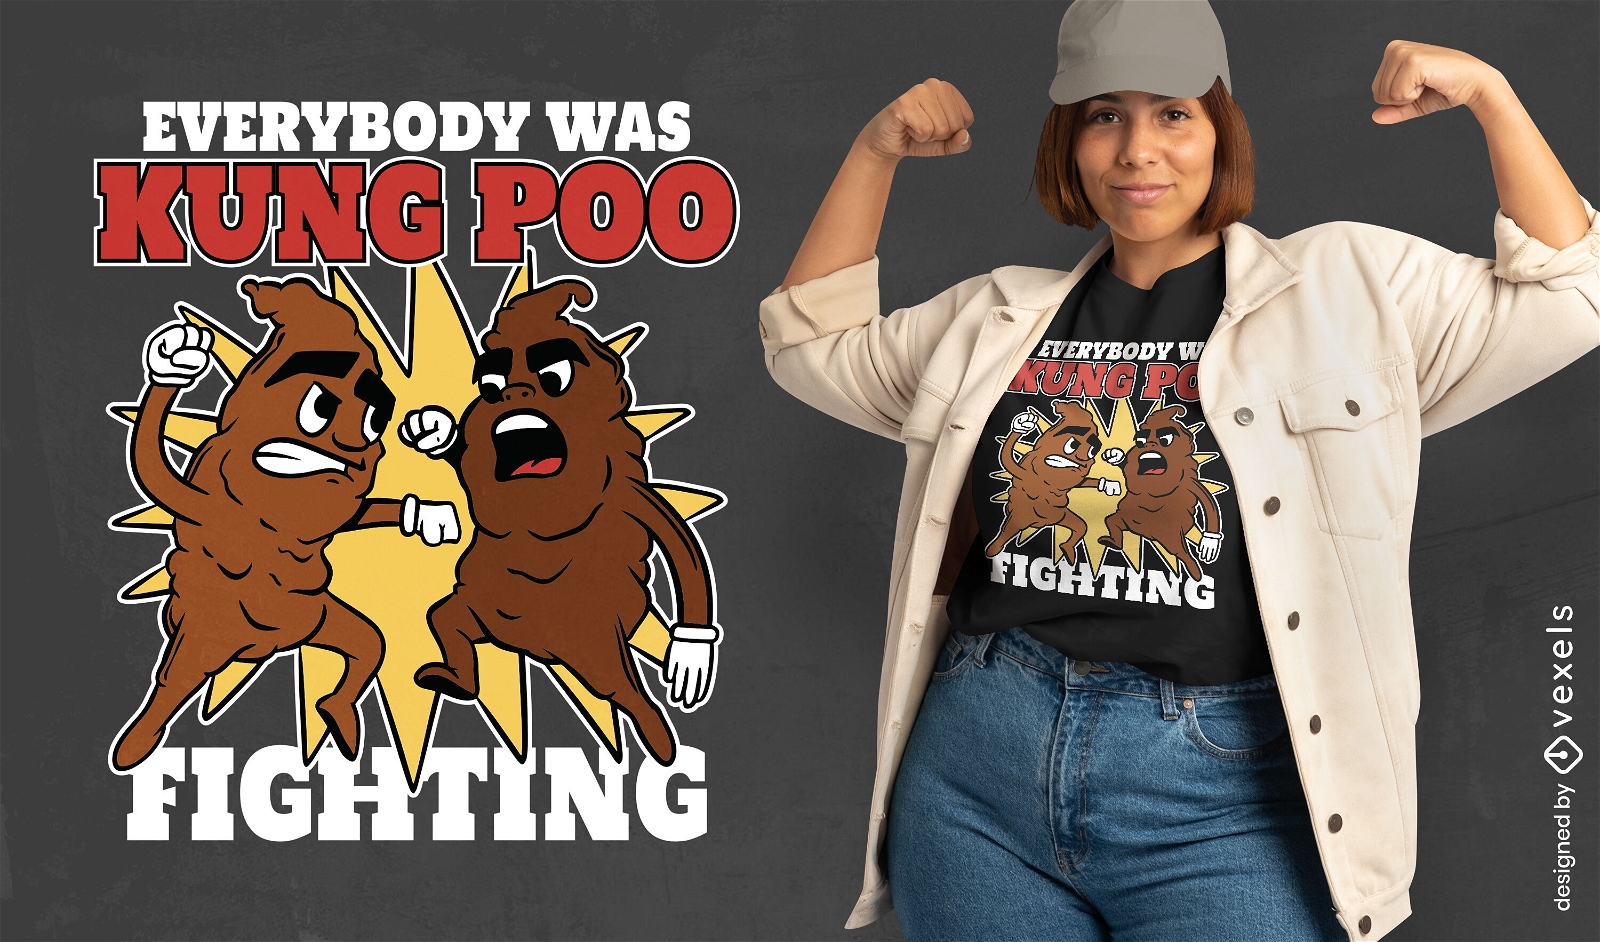 Kung poo fight humor t-shirt design